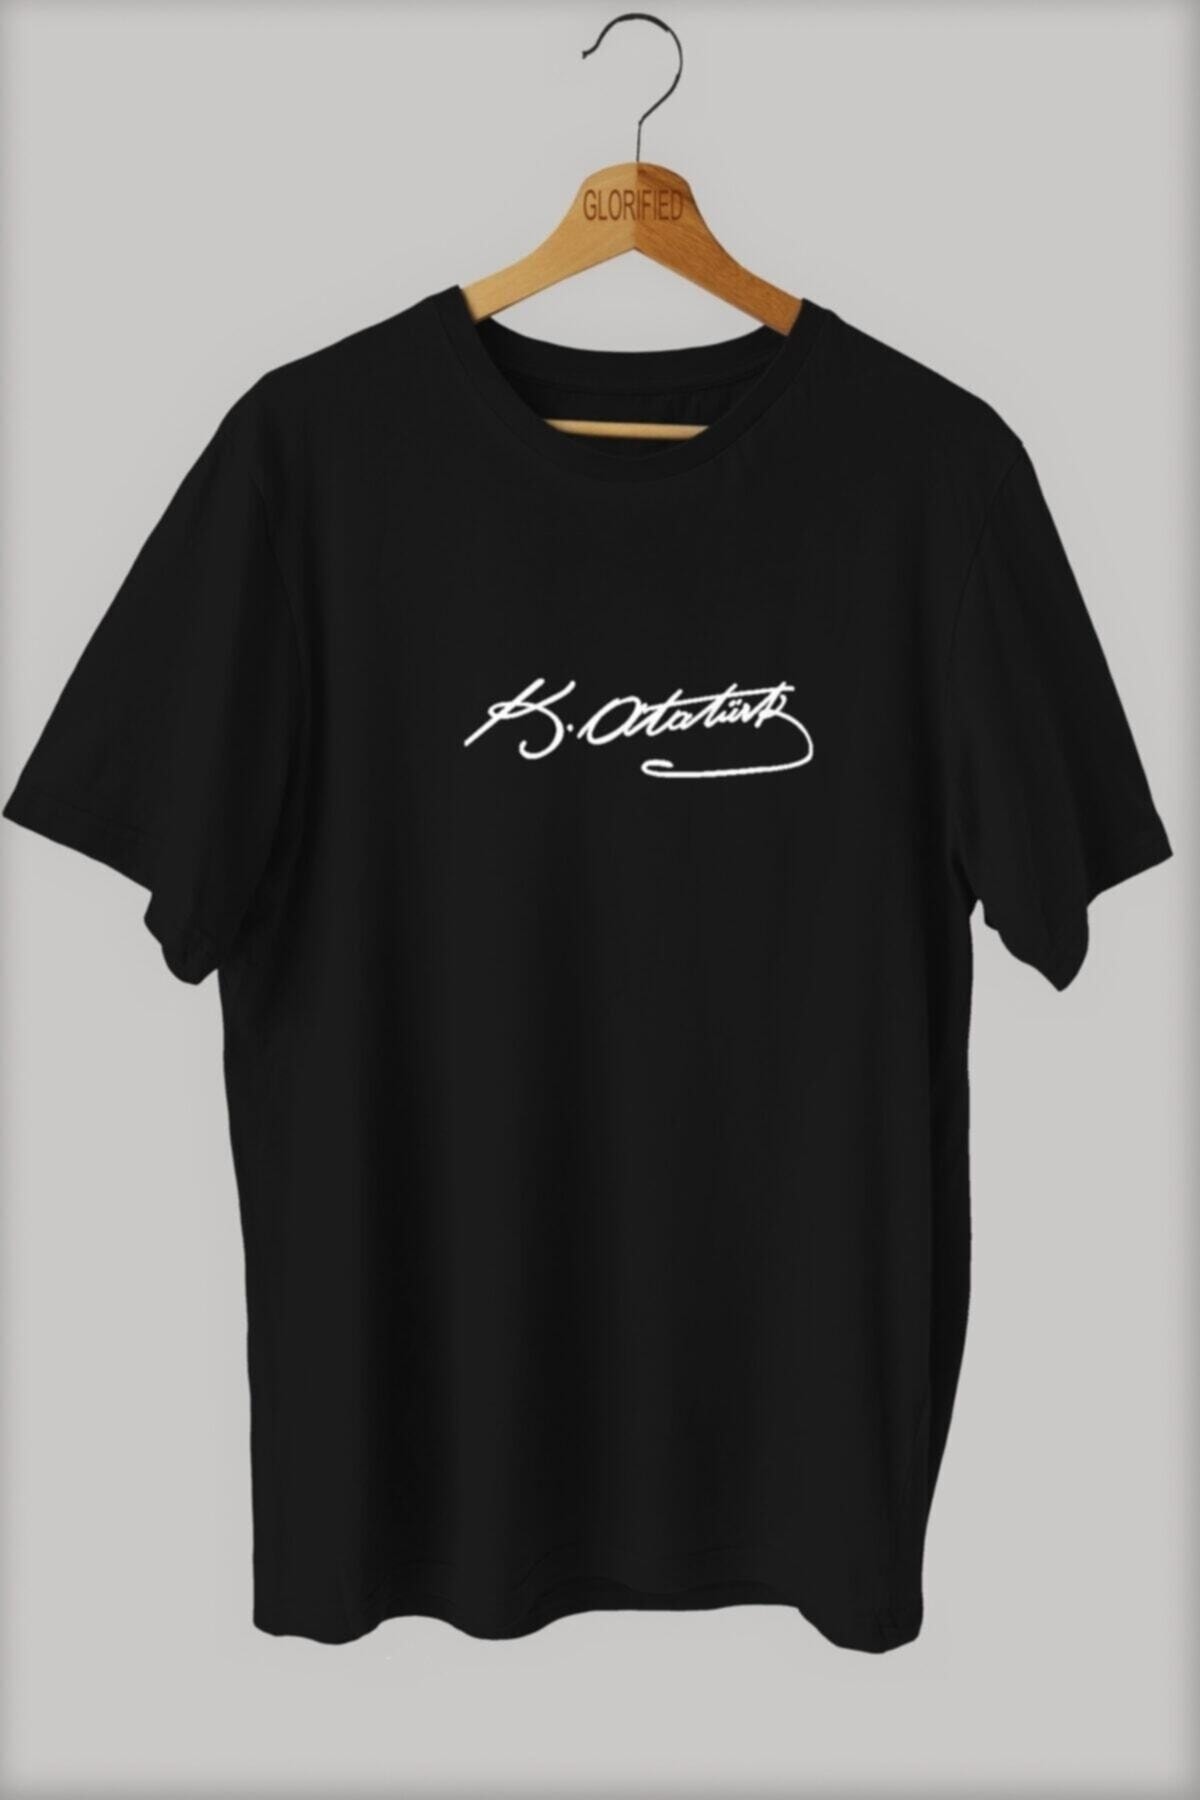 Glorified Kemal Atatürk Imza Baskılı Oversize T-shirt ( Tişört ) %100 Cotton